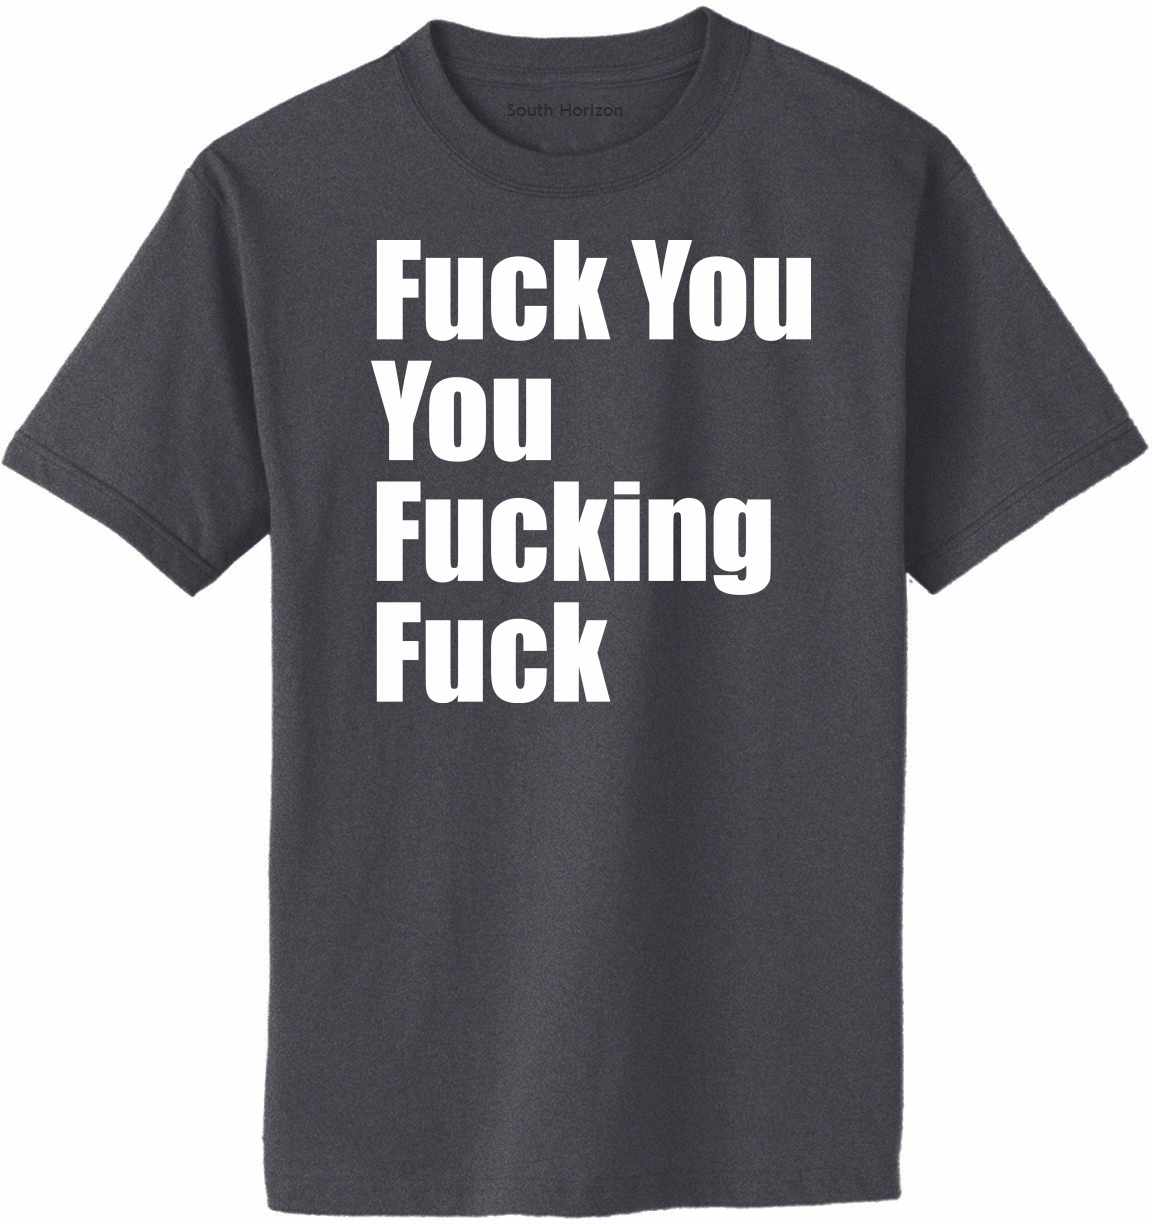 Fuck You You Fucking Fuck on Adult T-Shirt (#1188-1)